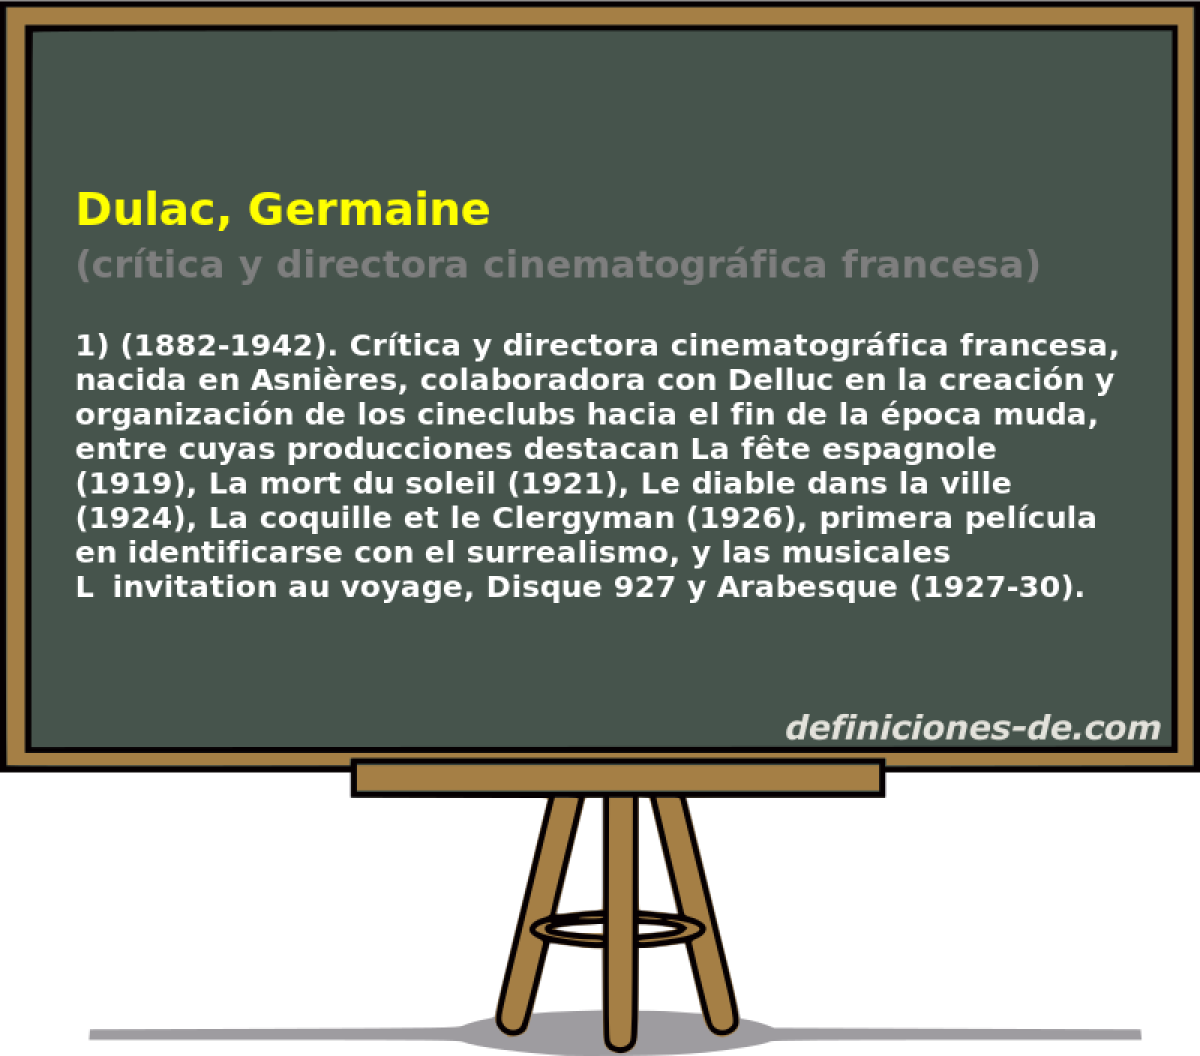 Dulac, Germaine (crtica y directora cinematogrfica francesa)